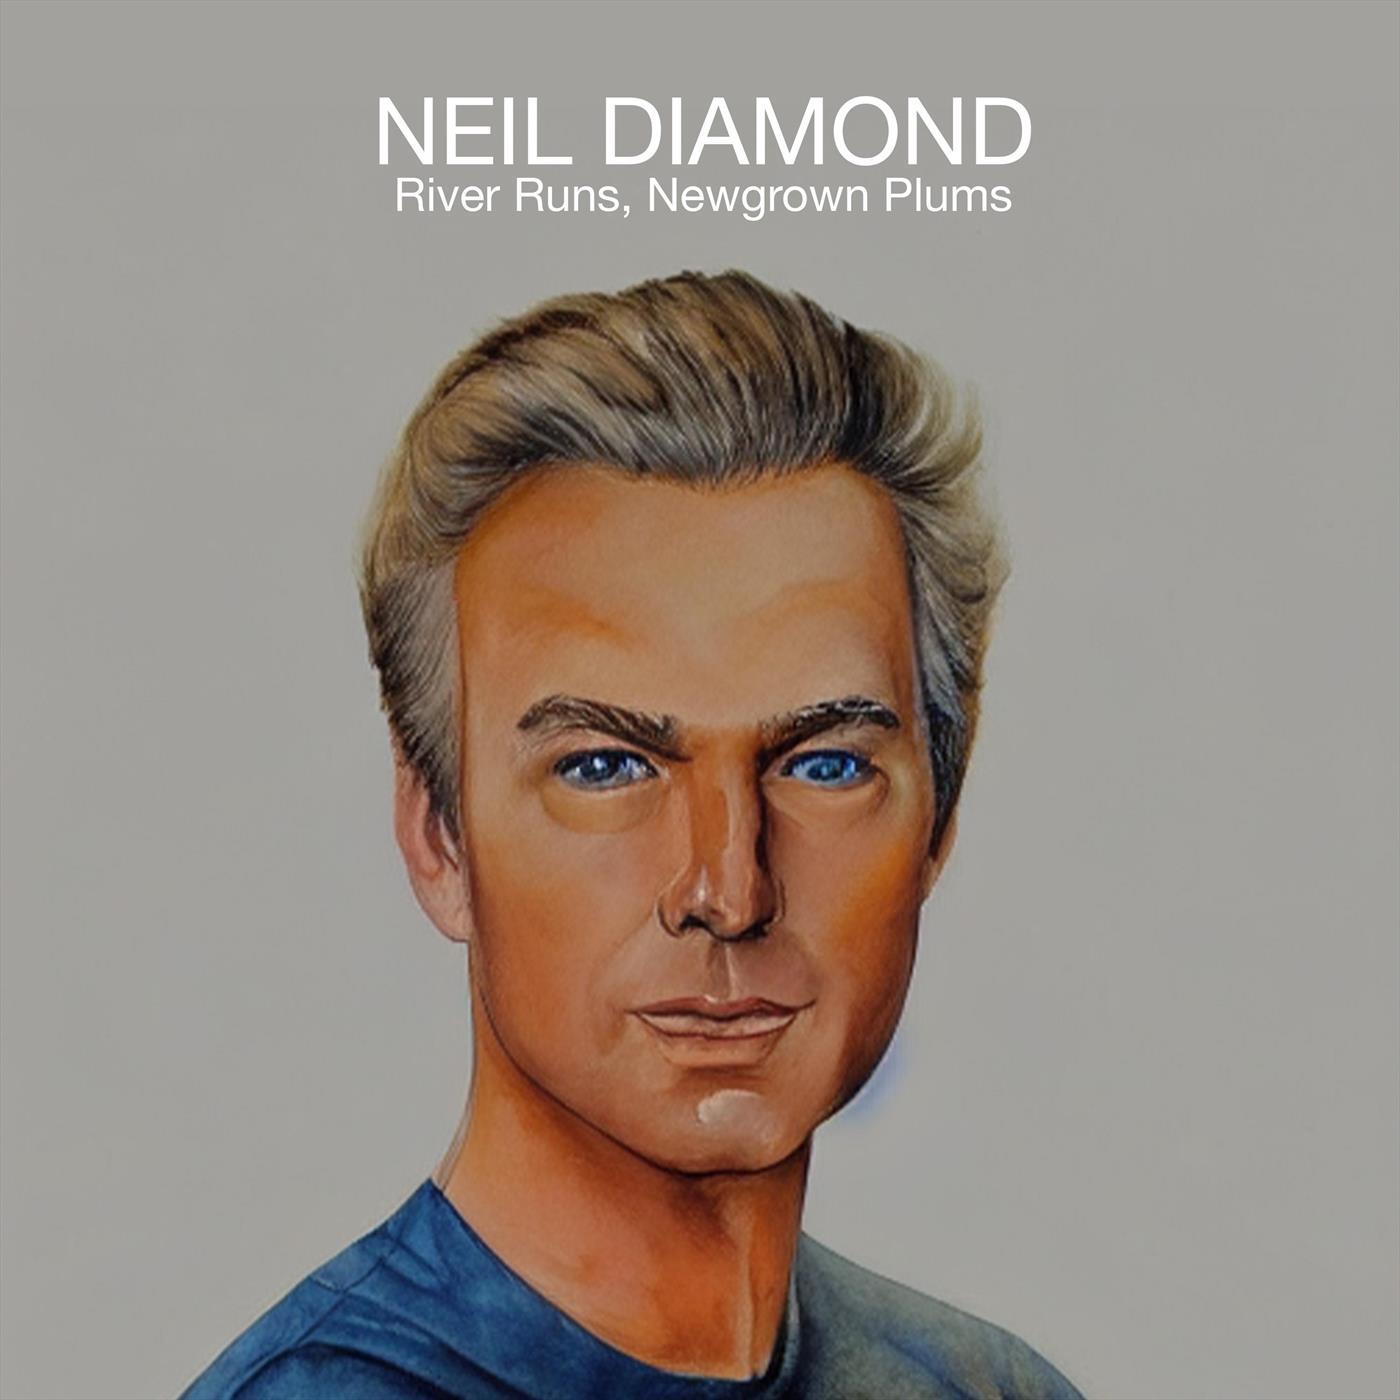 Neil Diamond - And the Grass Won’t Pay No Mind